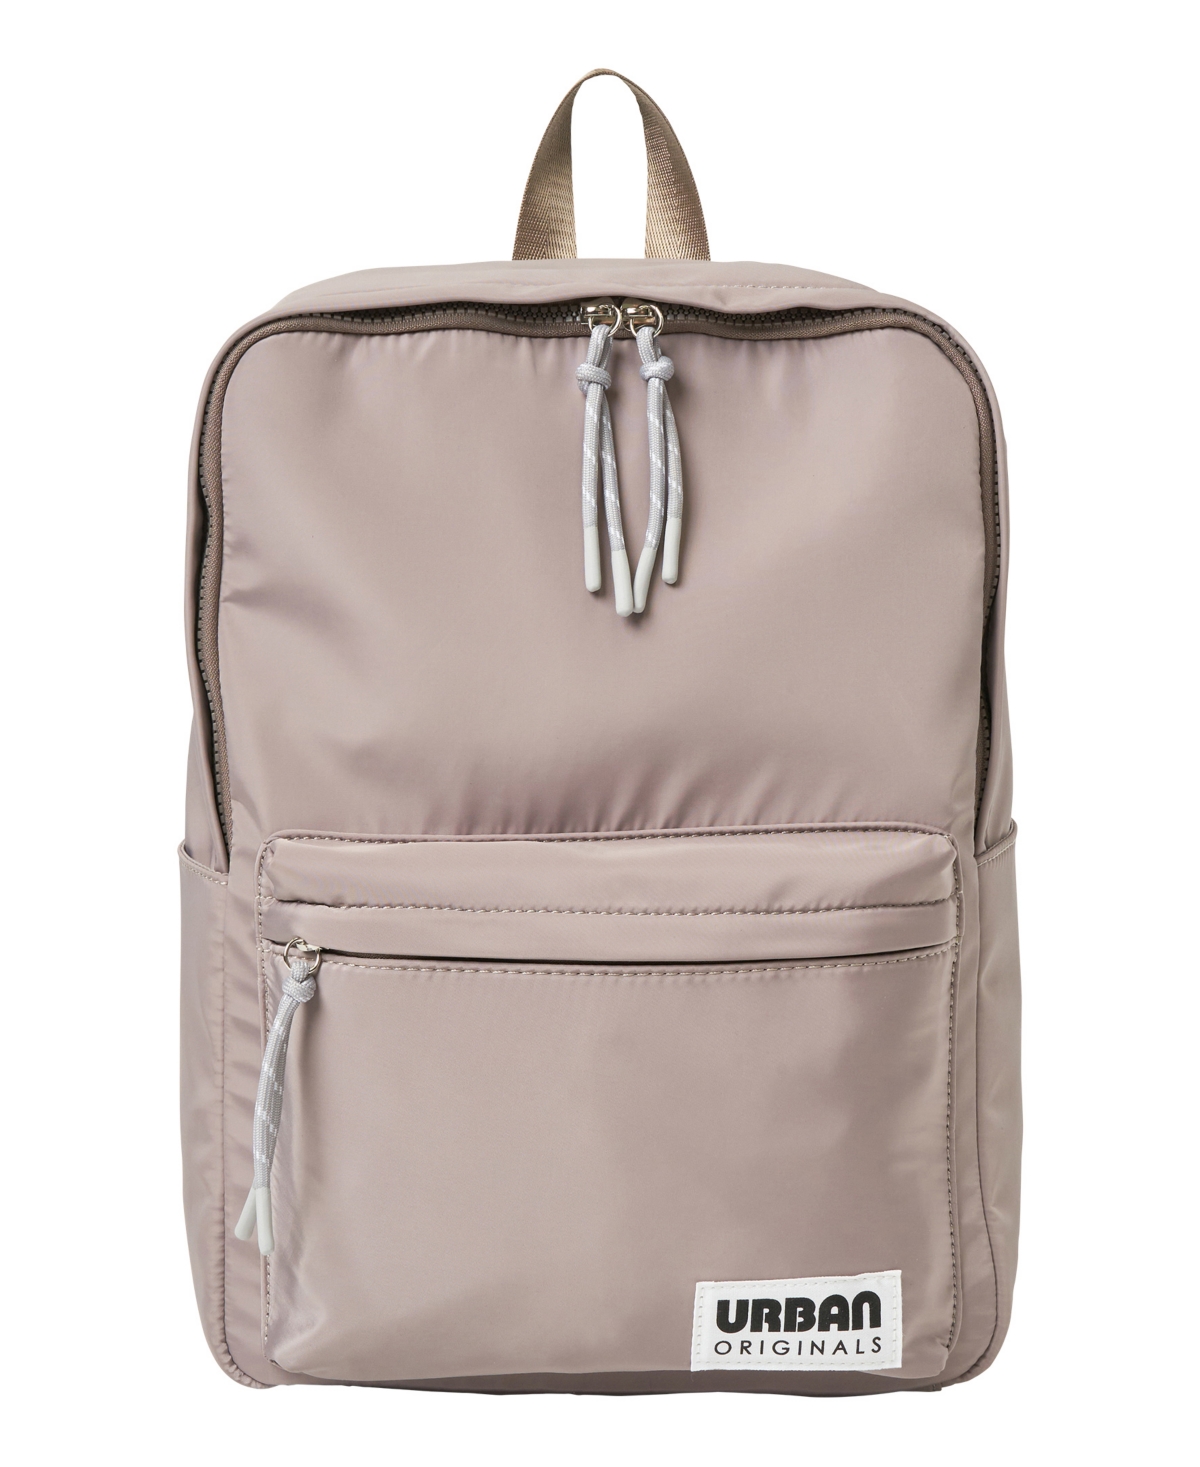 Urban Originals Poppy Small Backpack In Gray